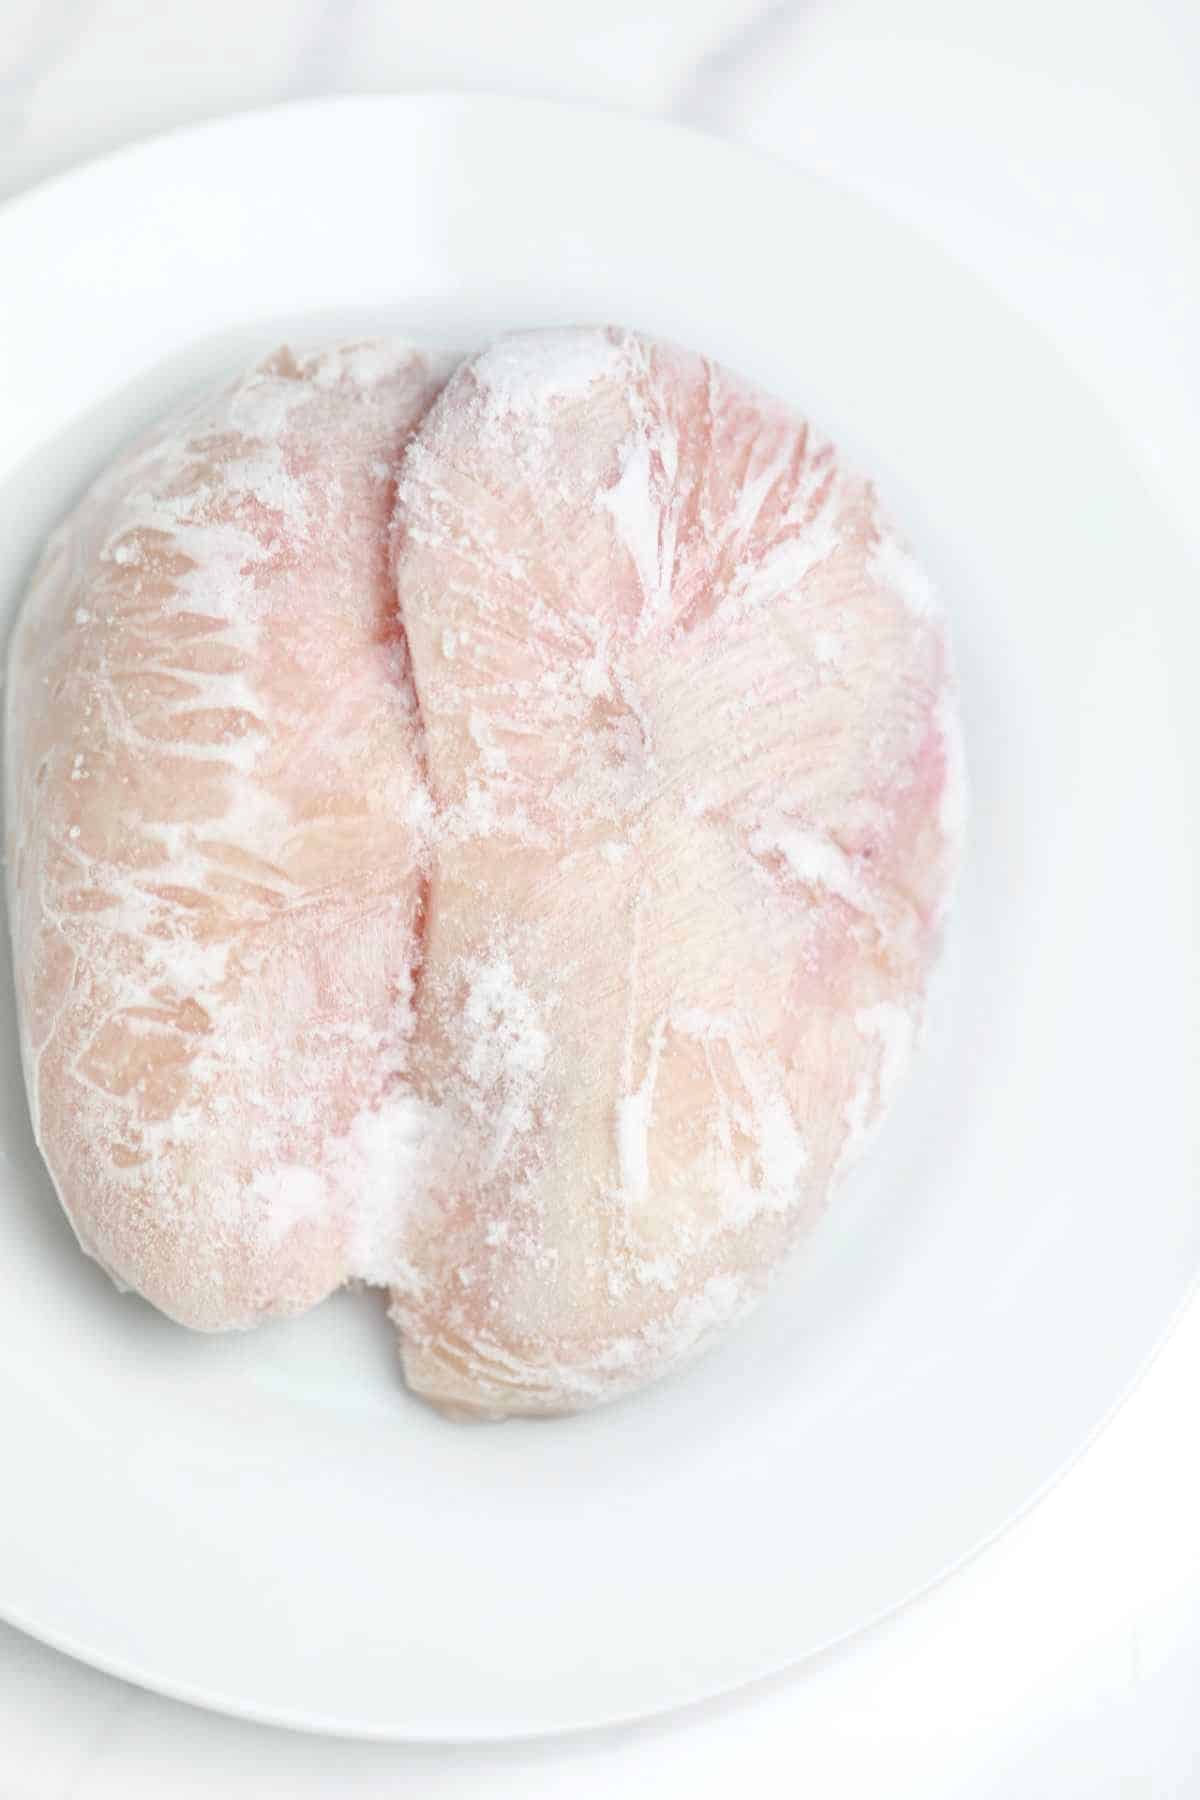 frozen chicken on a plate.